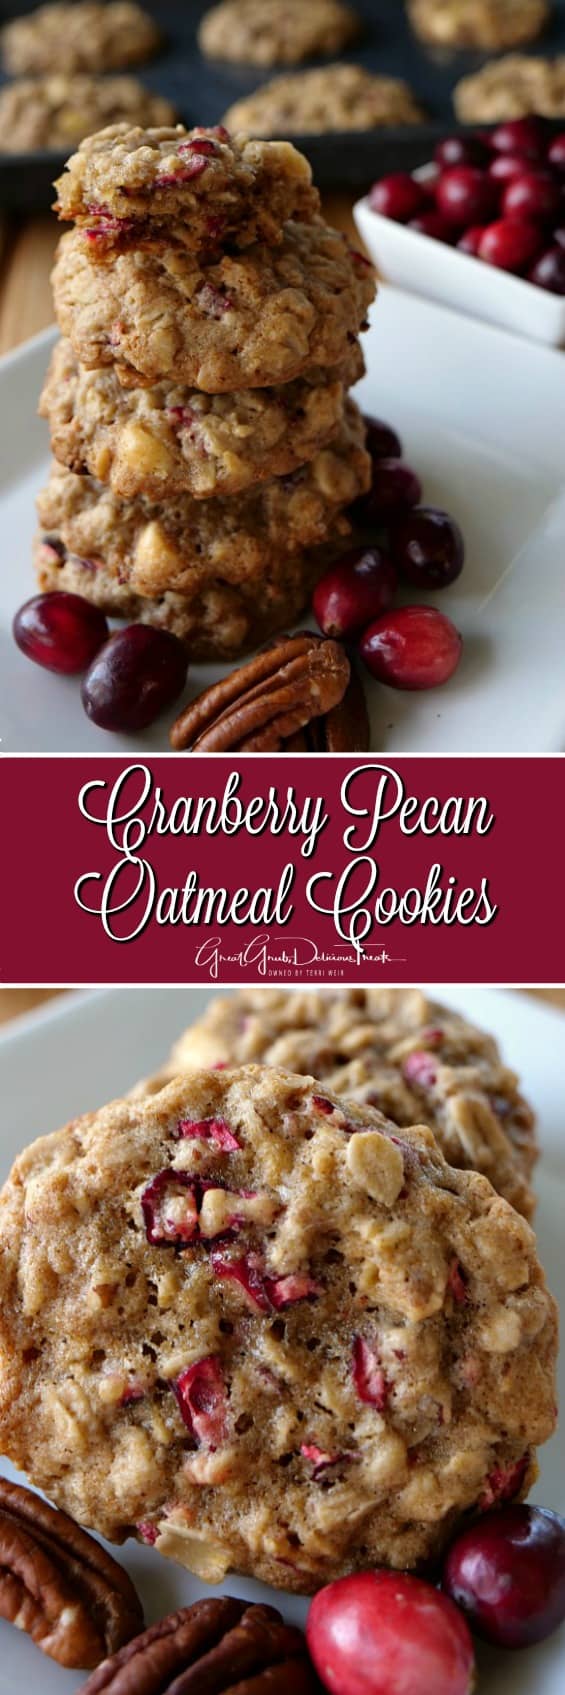 Cranberry Pecan Oatmeal Cookies